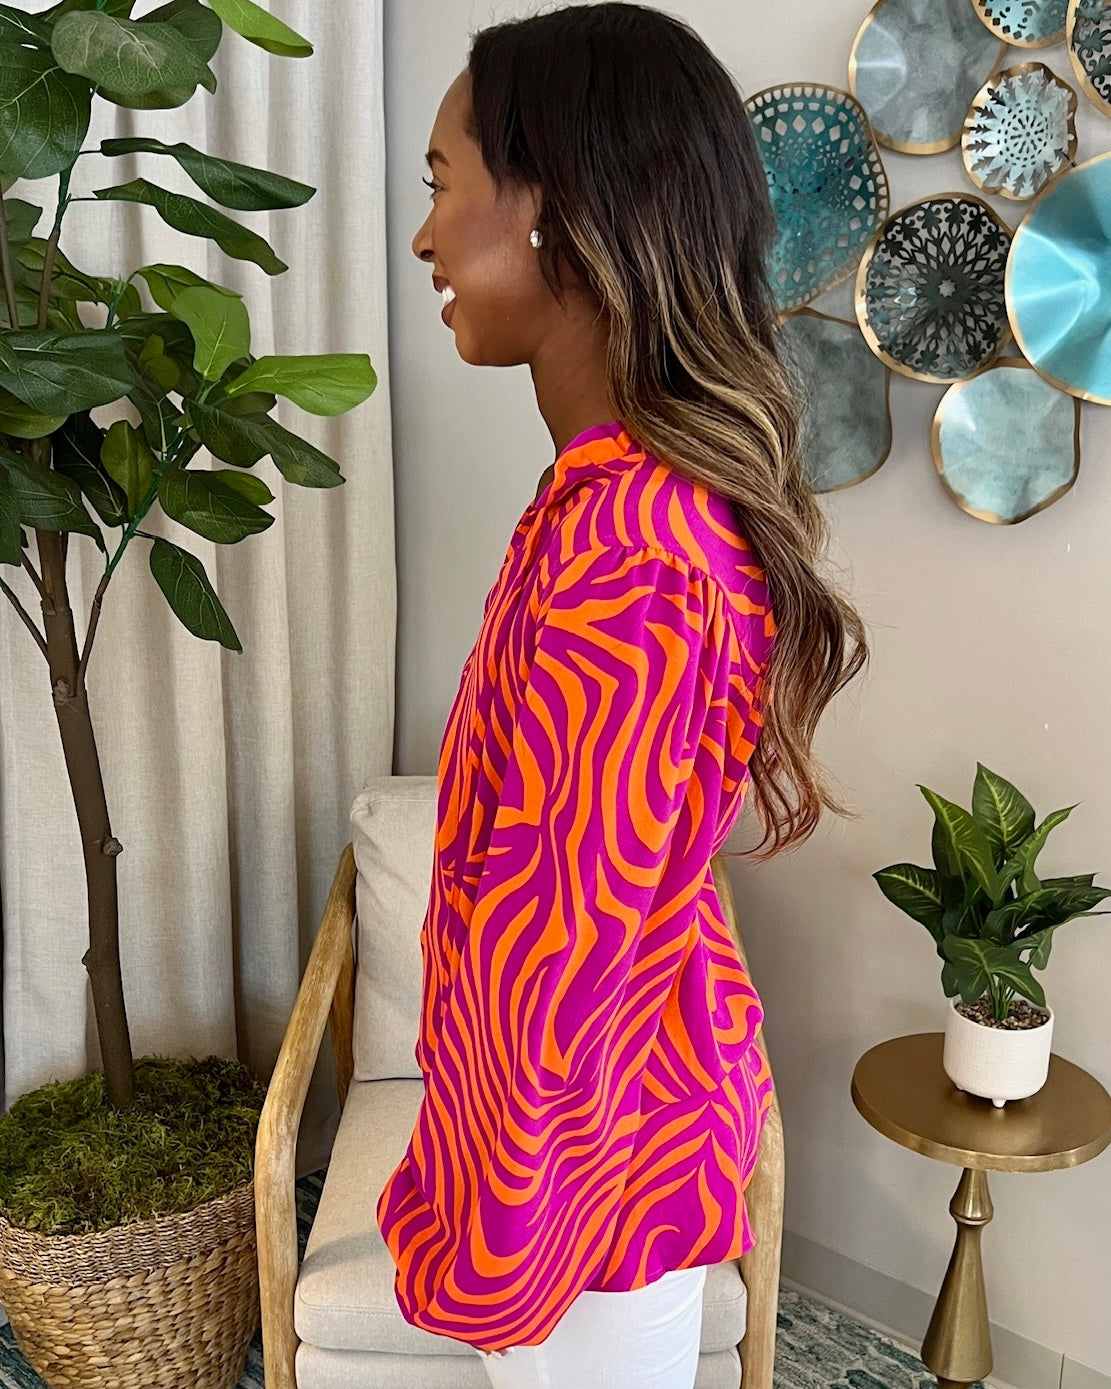 Too Divine Hot Pink/Orange Zebra Top-Shop-Womens-Boutique-Clothing